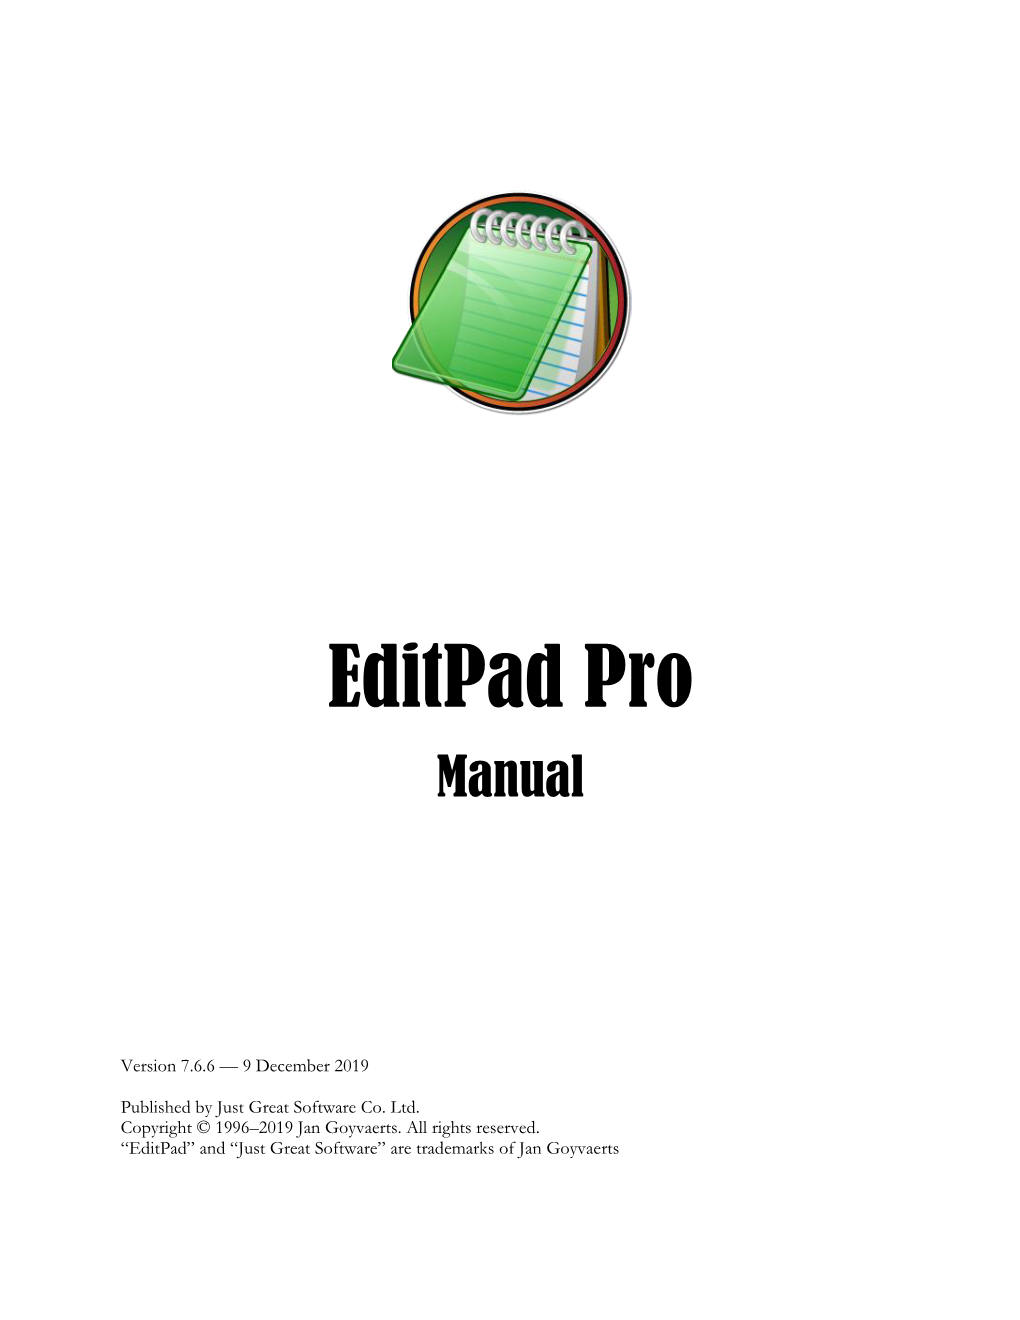 Editpad Pro 7 Manual in PDF Format